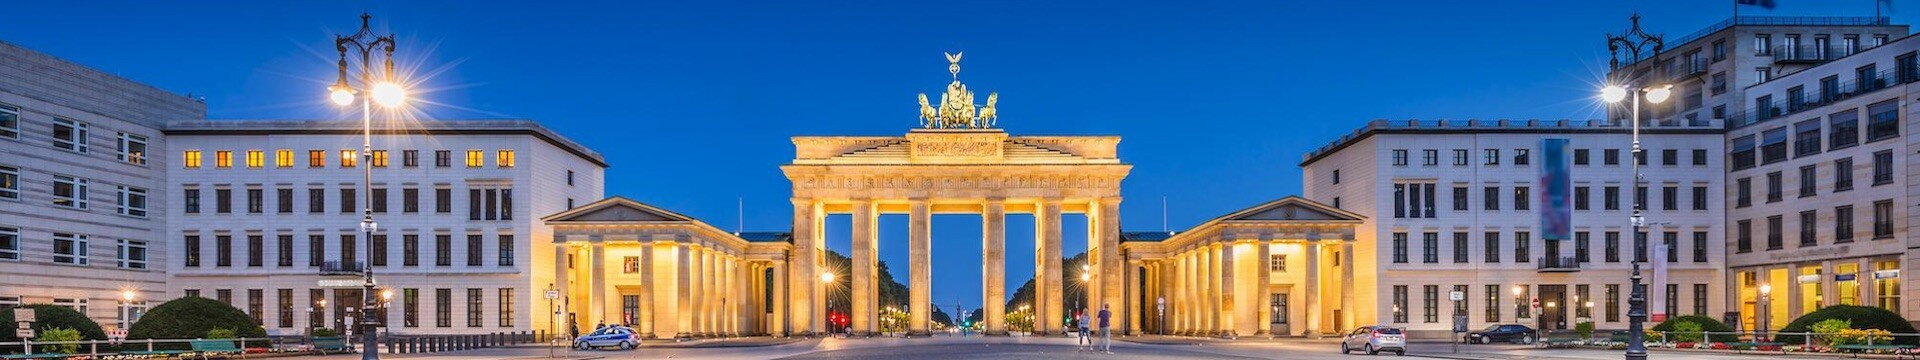 Brandenberg Gate in Berlin of Germany